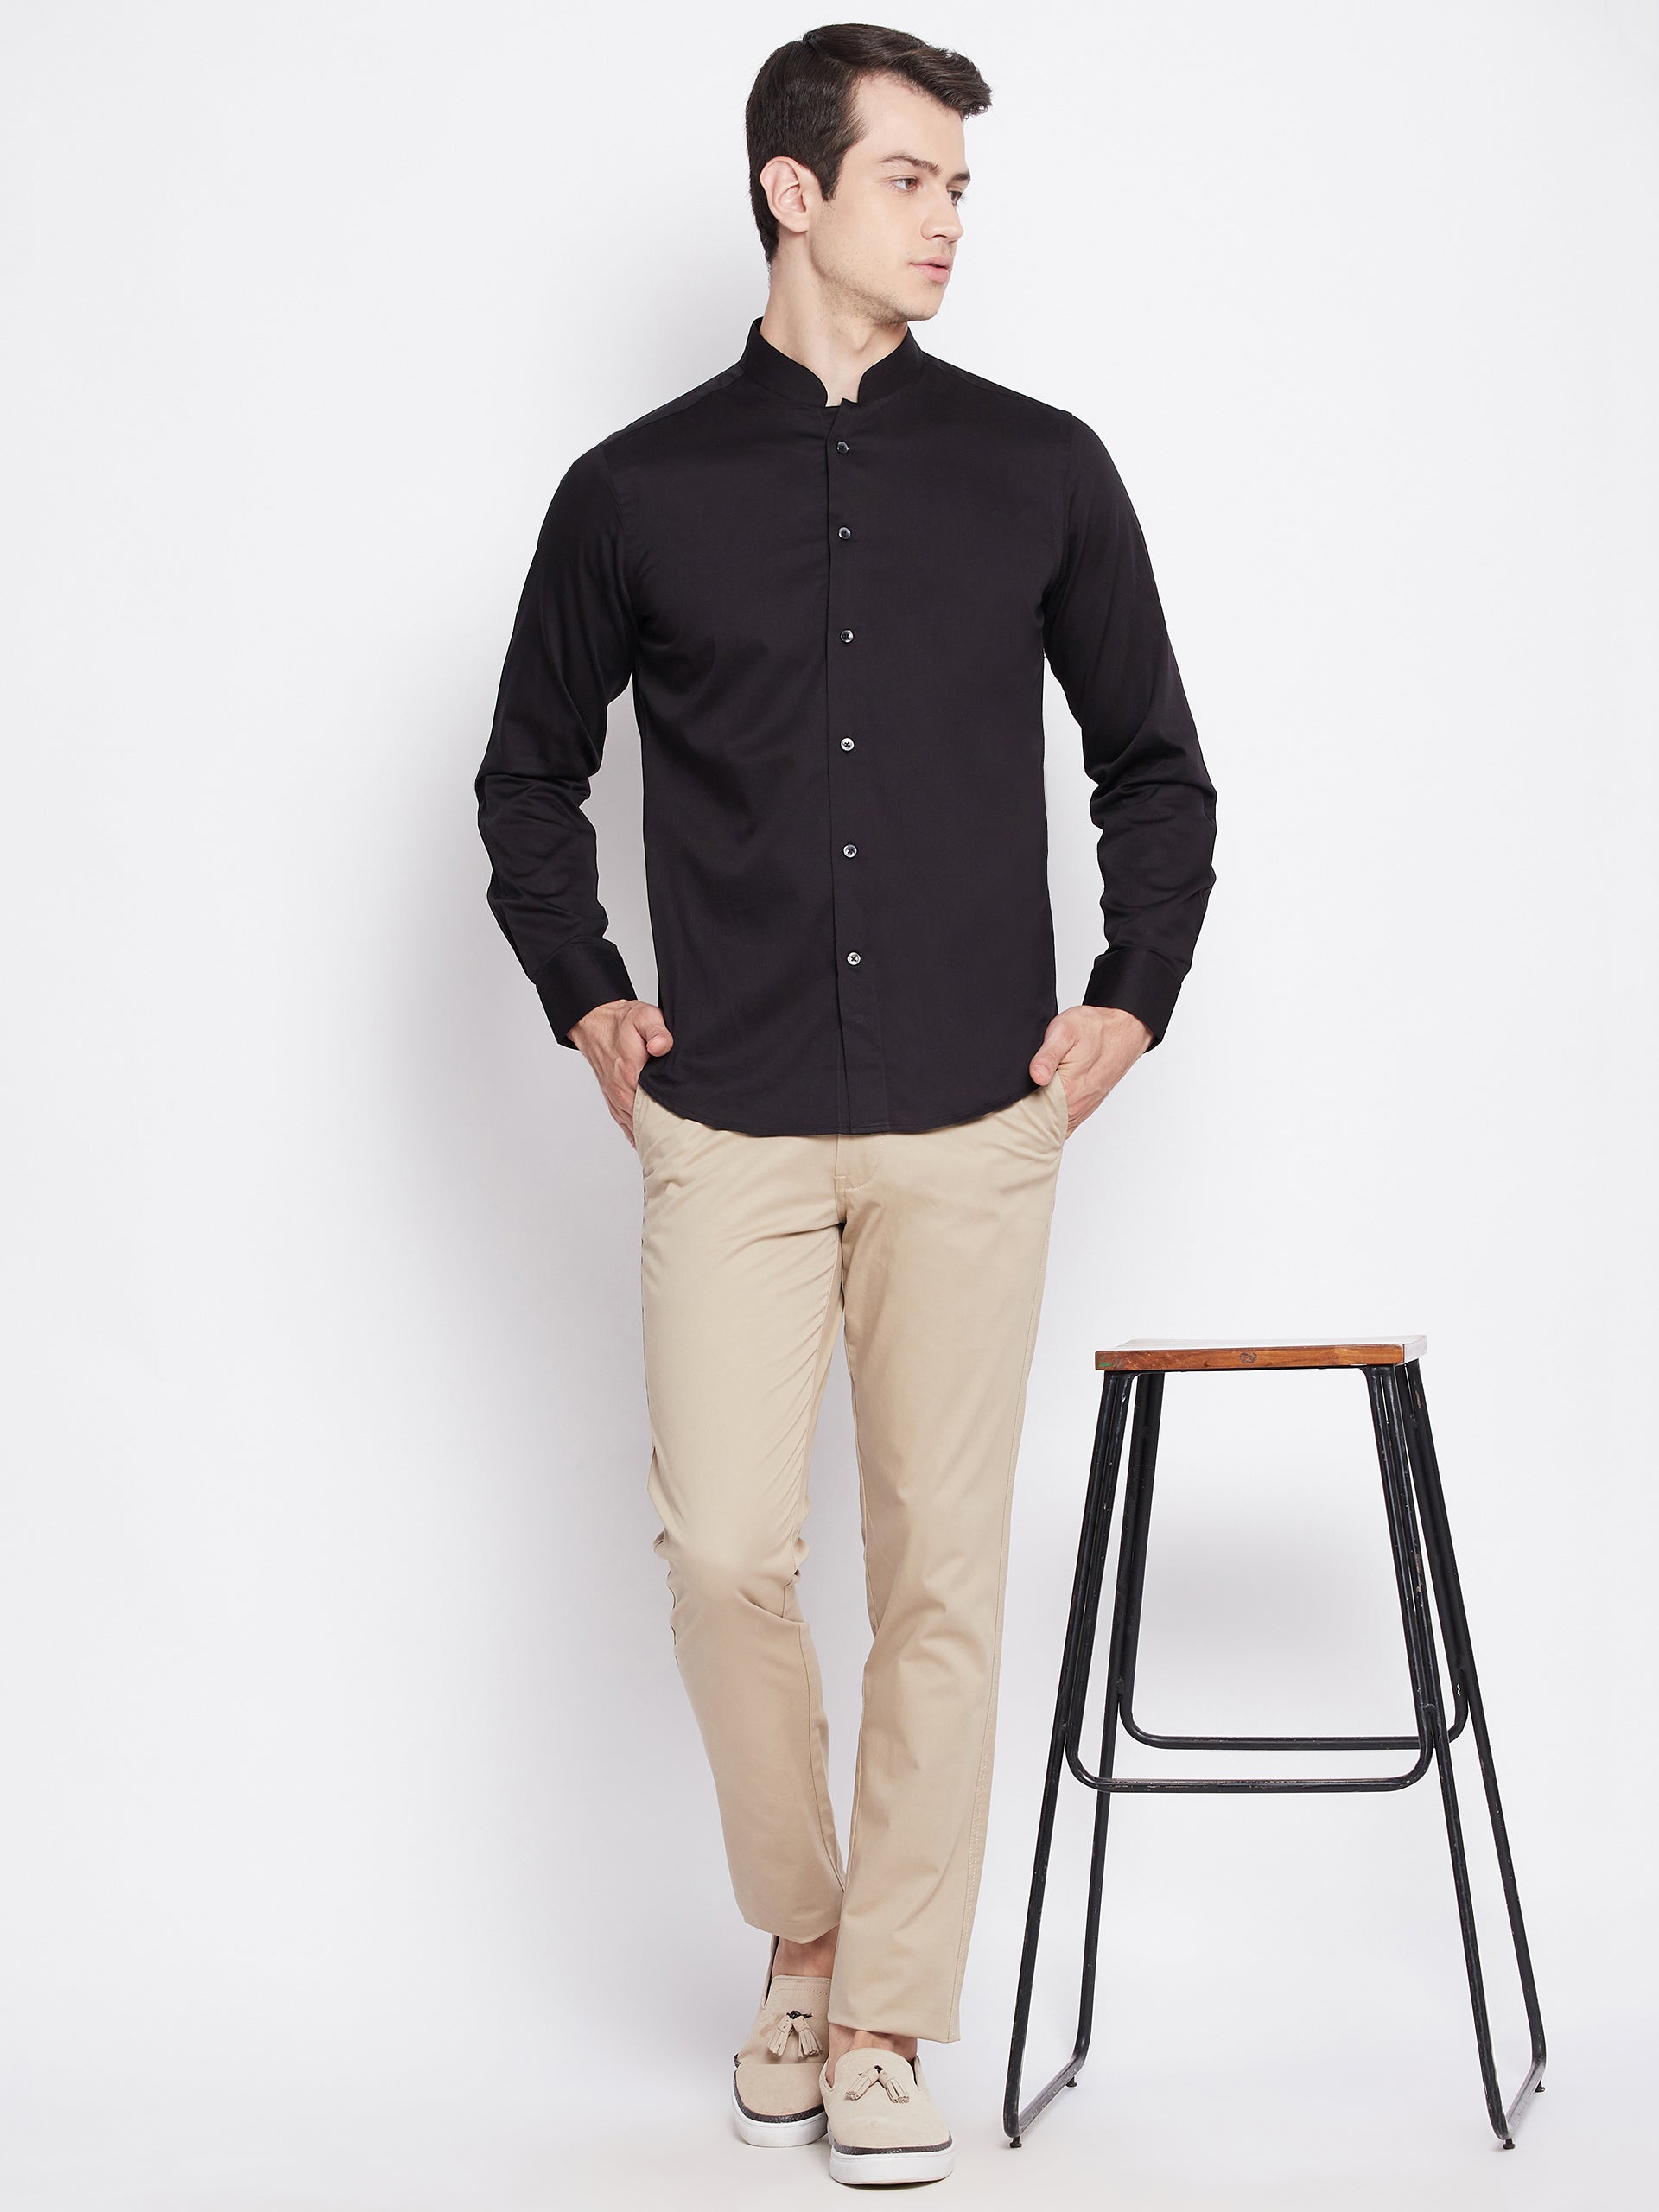 Men's Guide to Matching Pant Shirt Color Combination - LooksGud.com |  男性のポーズ集, 男性, ポーズ